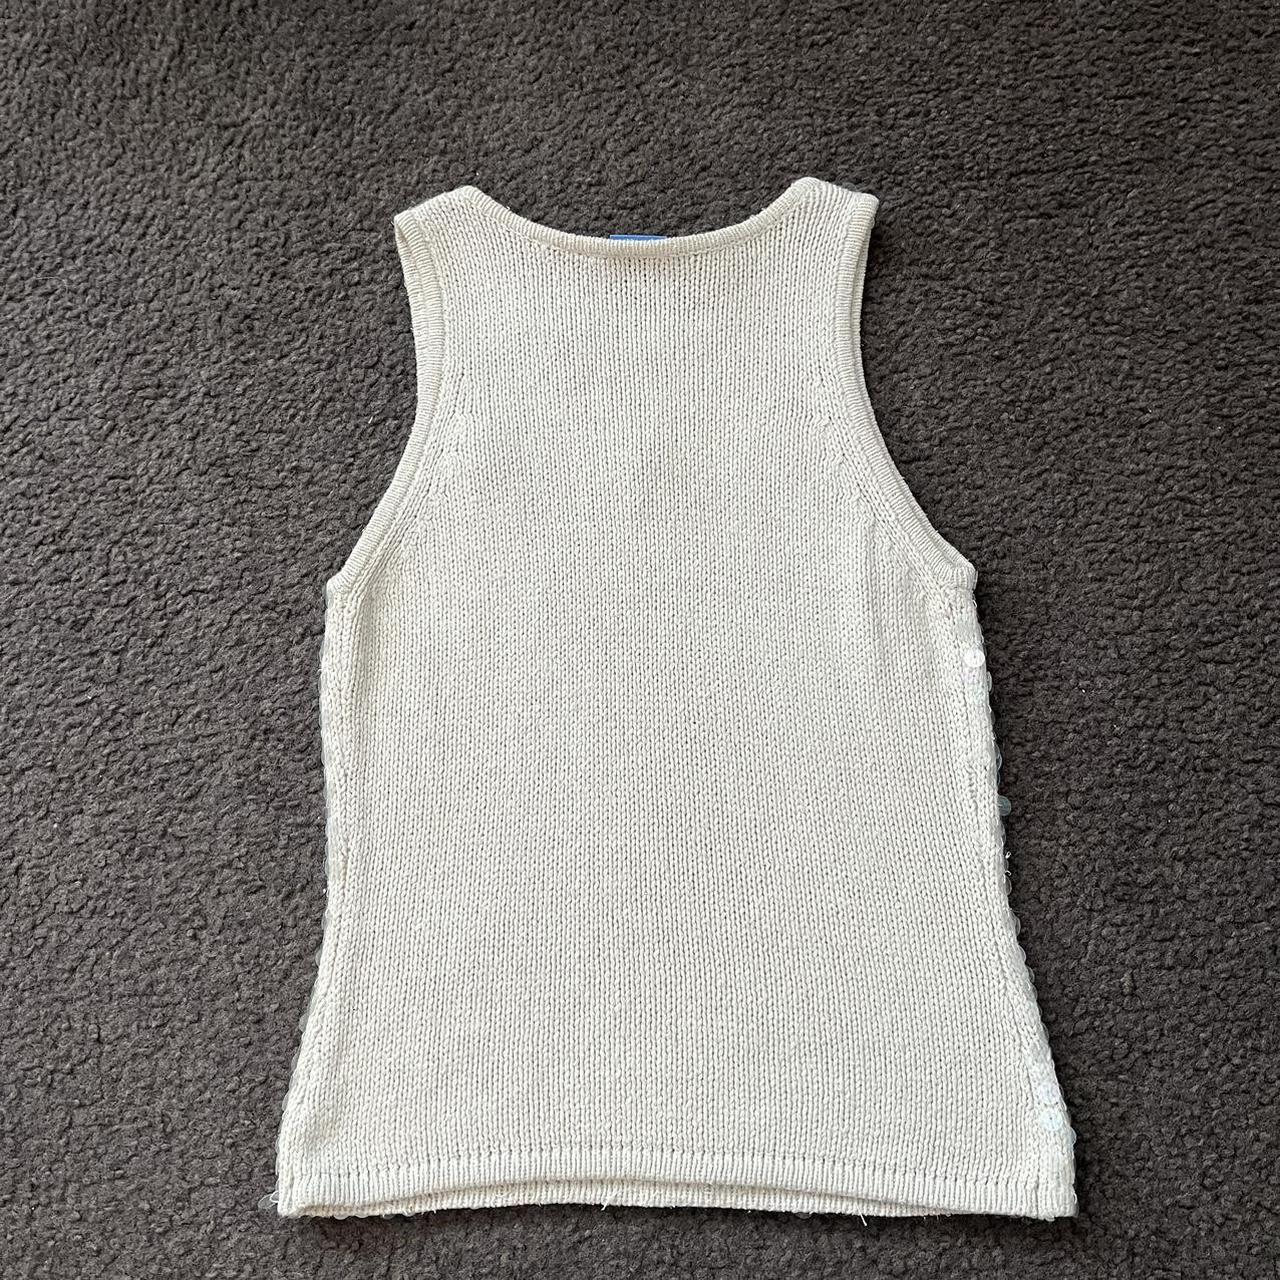 Next Women's Cream and White Vest (3)